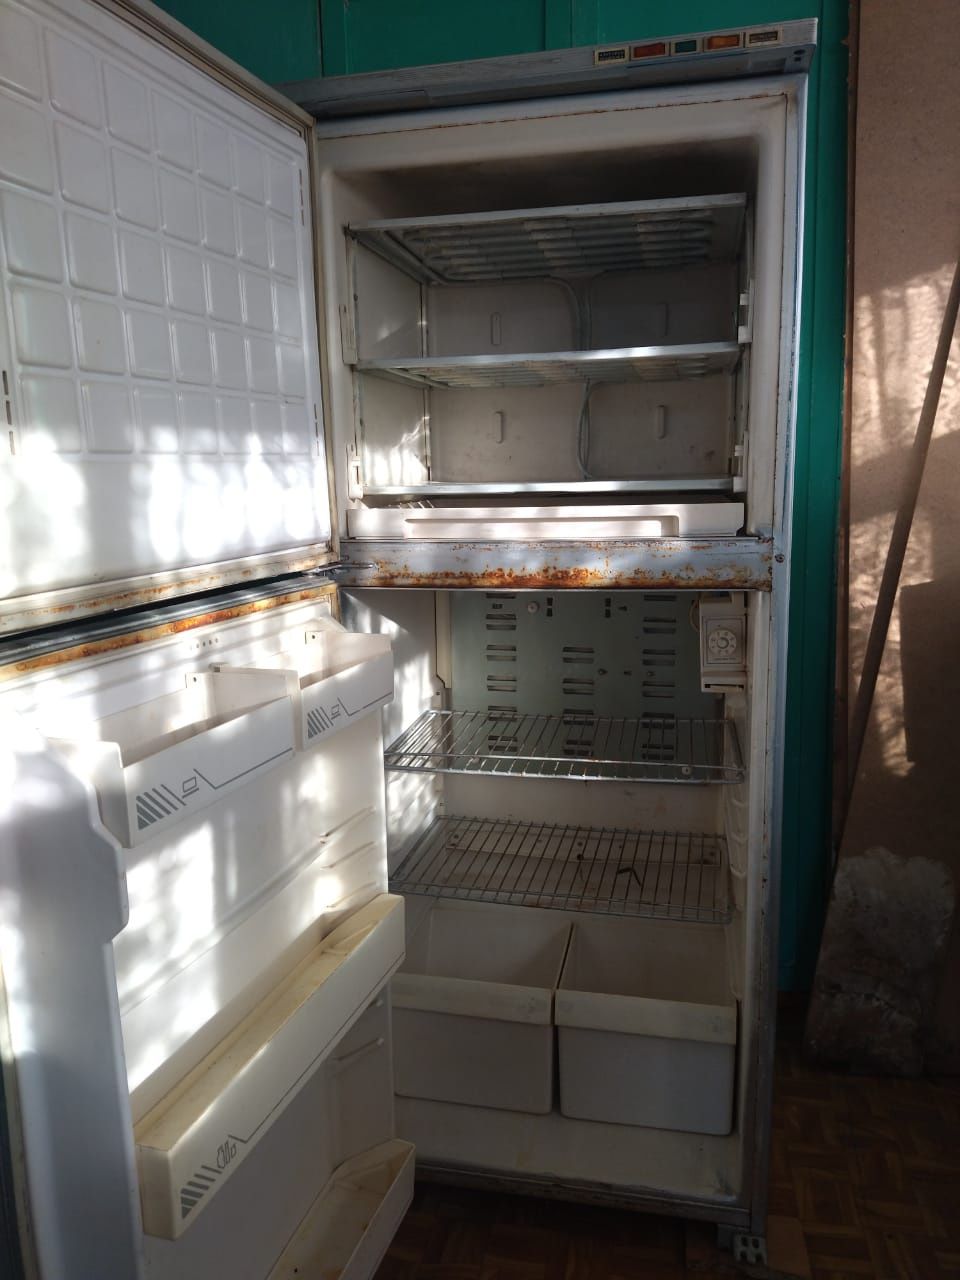 Продам холодильники